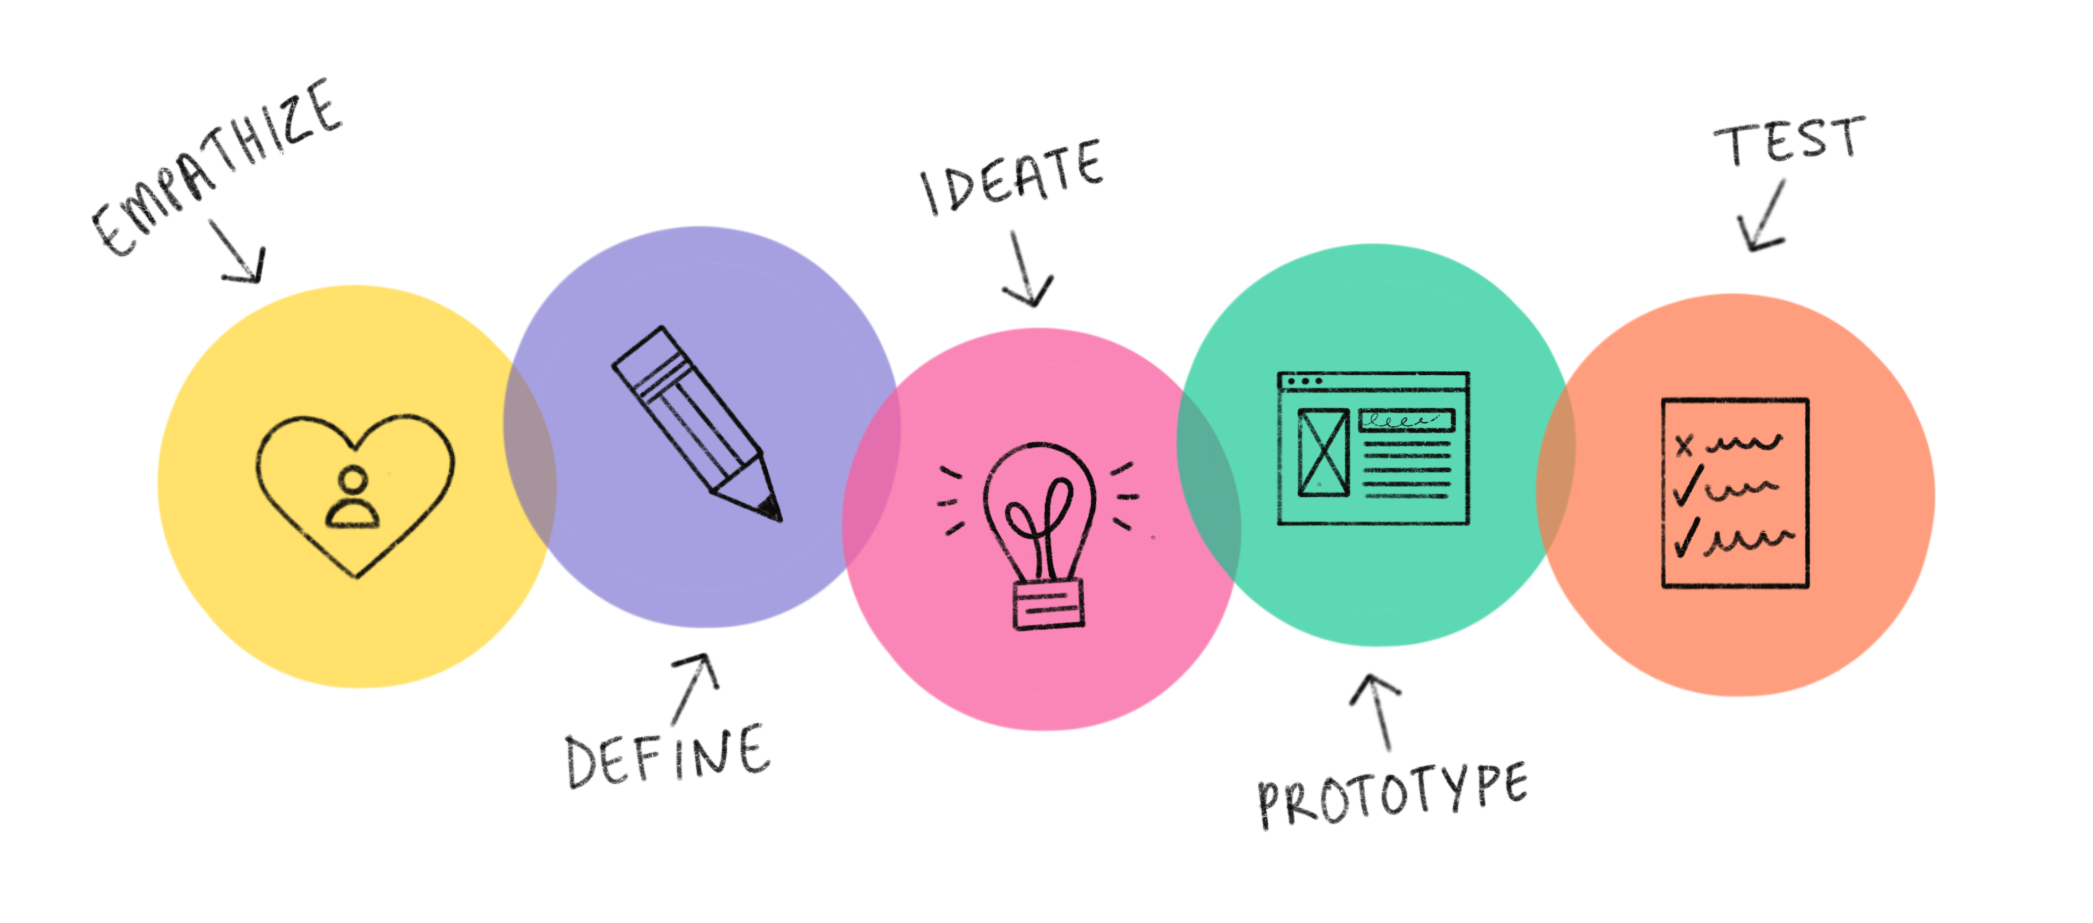 Design Thinking Process Diagram. Empathize, Define, Ideate, Prototype, Test